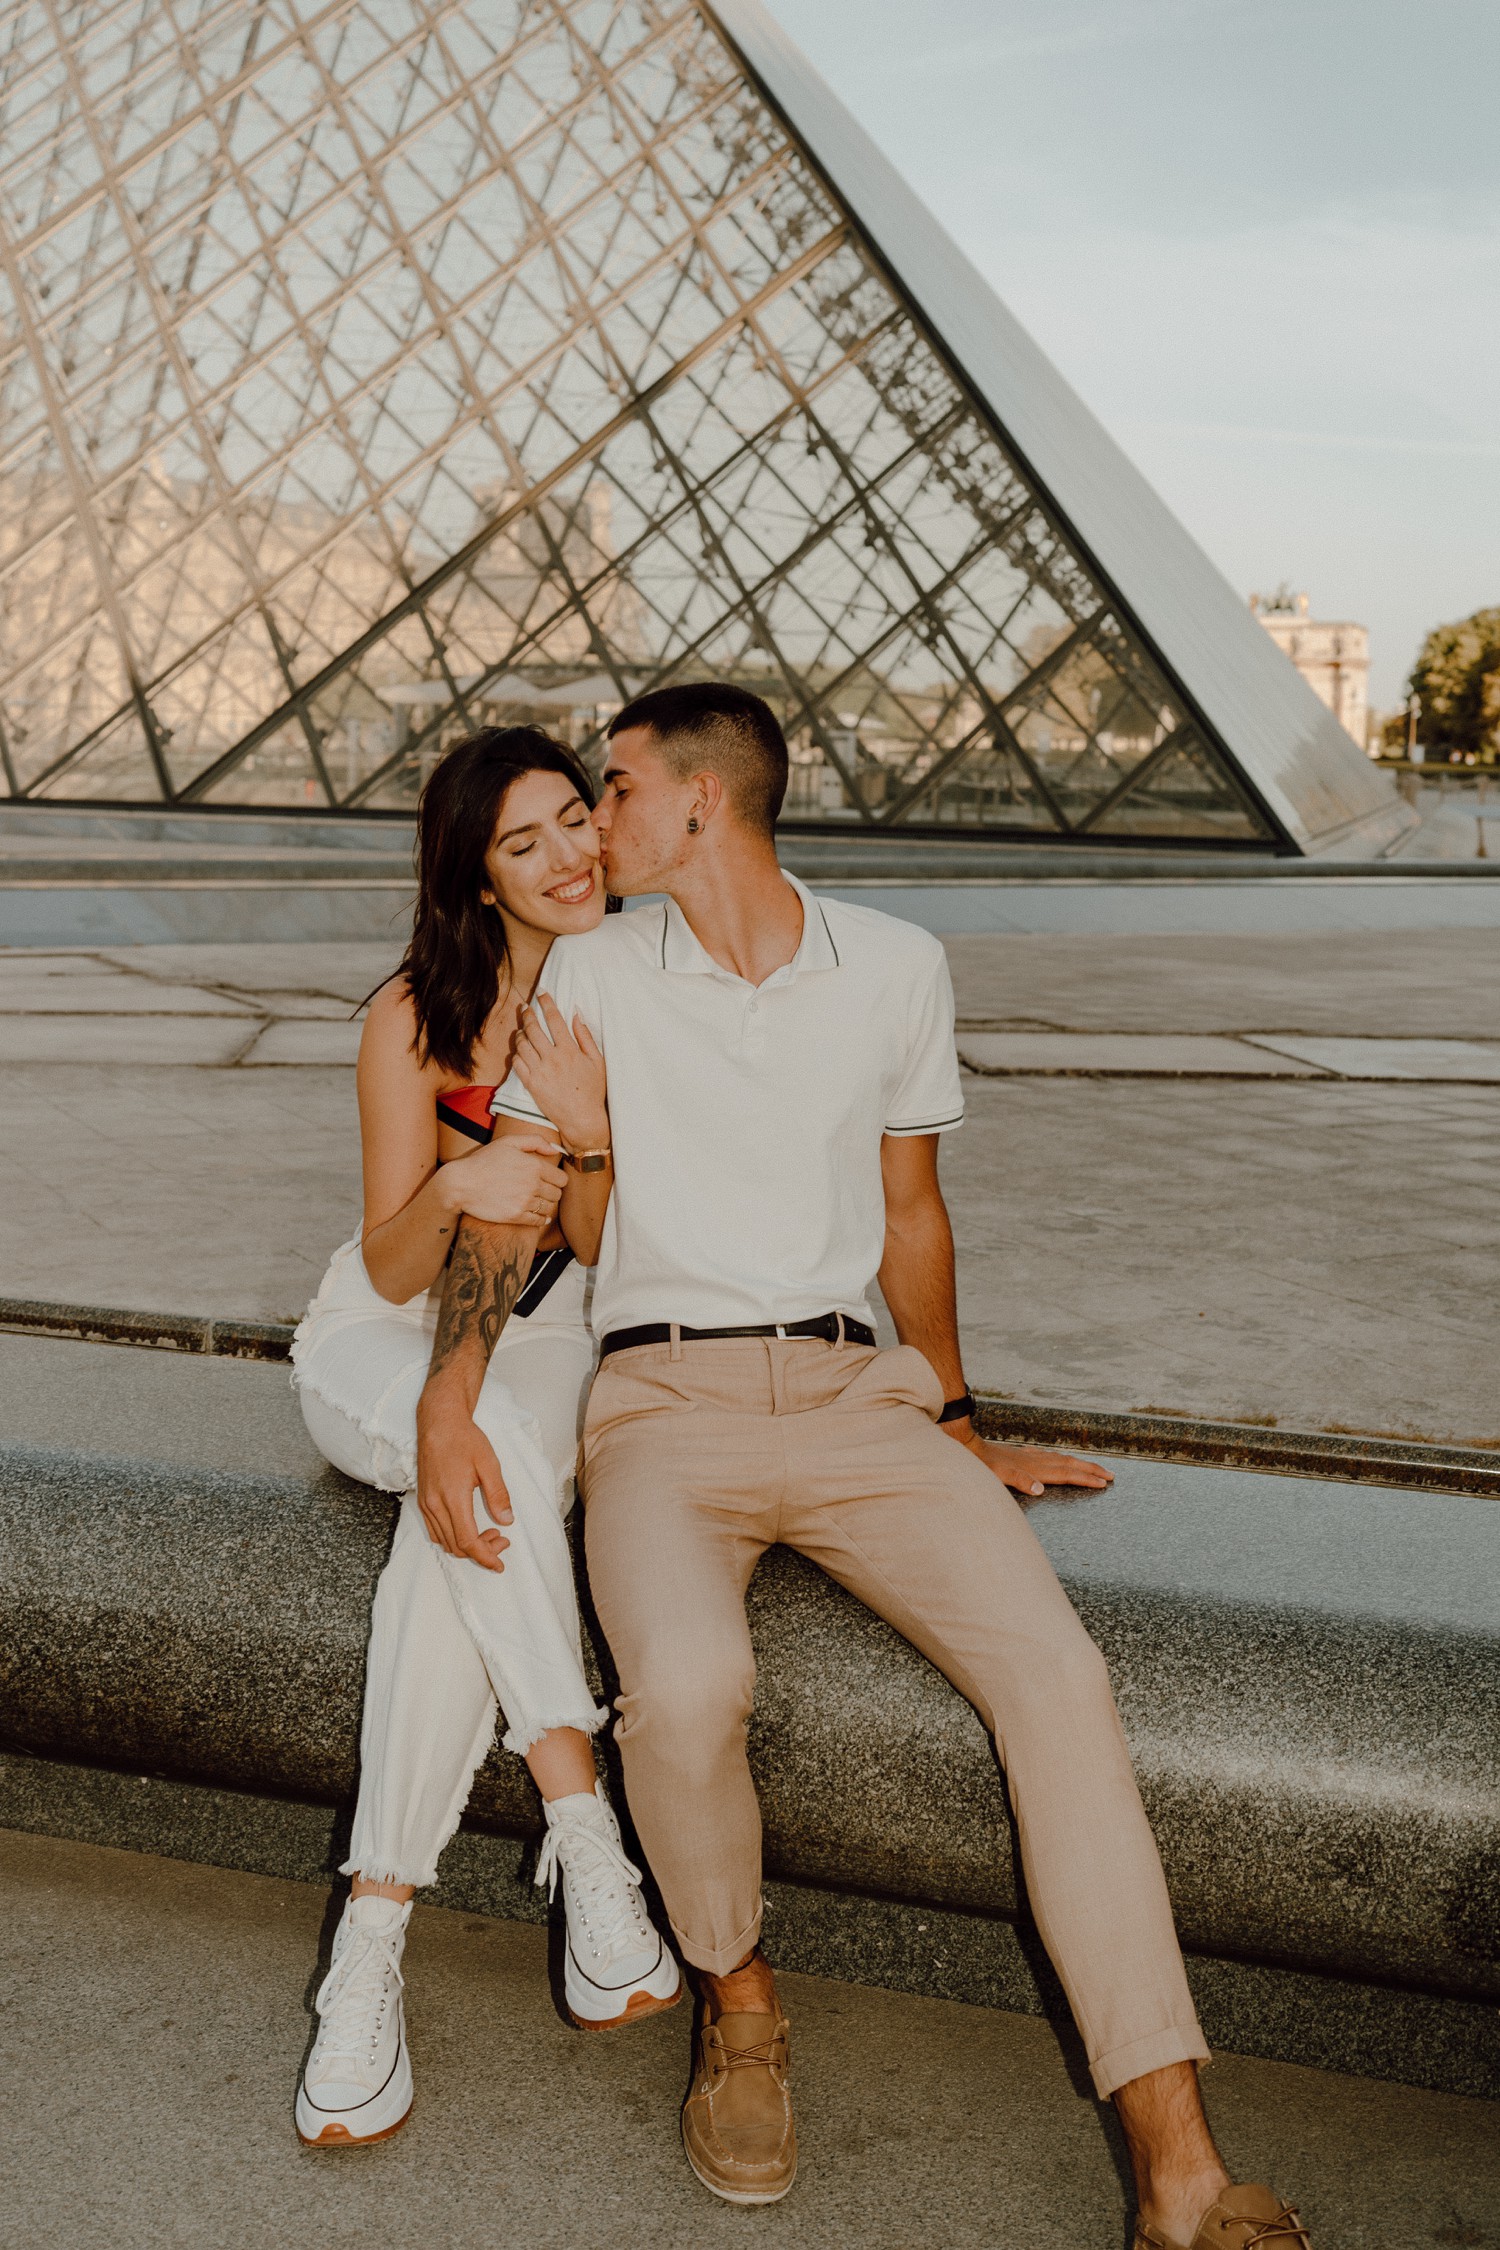 Louvre Pyramid Couples Photos